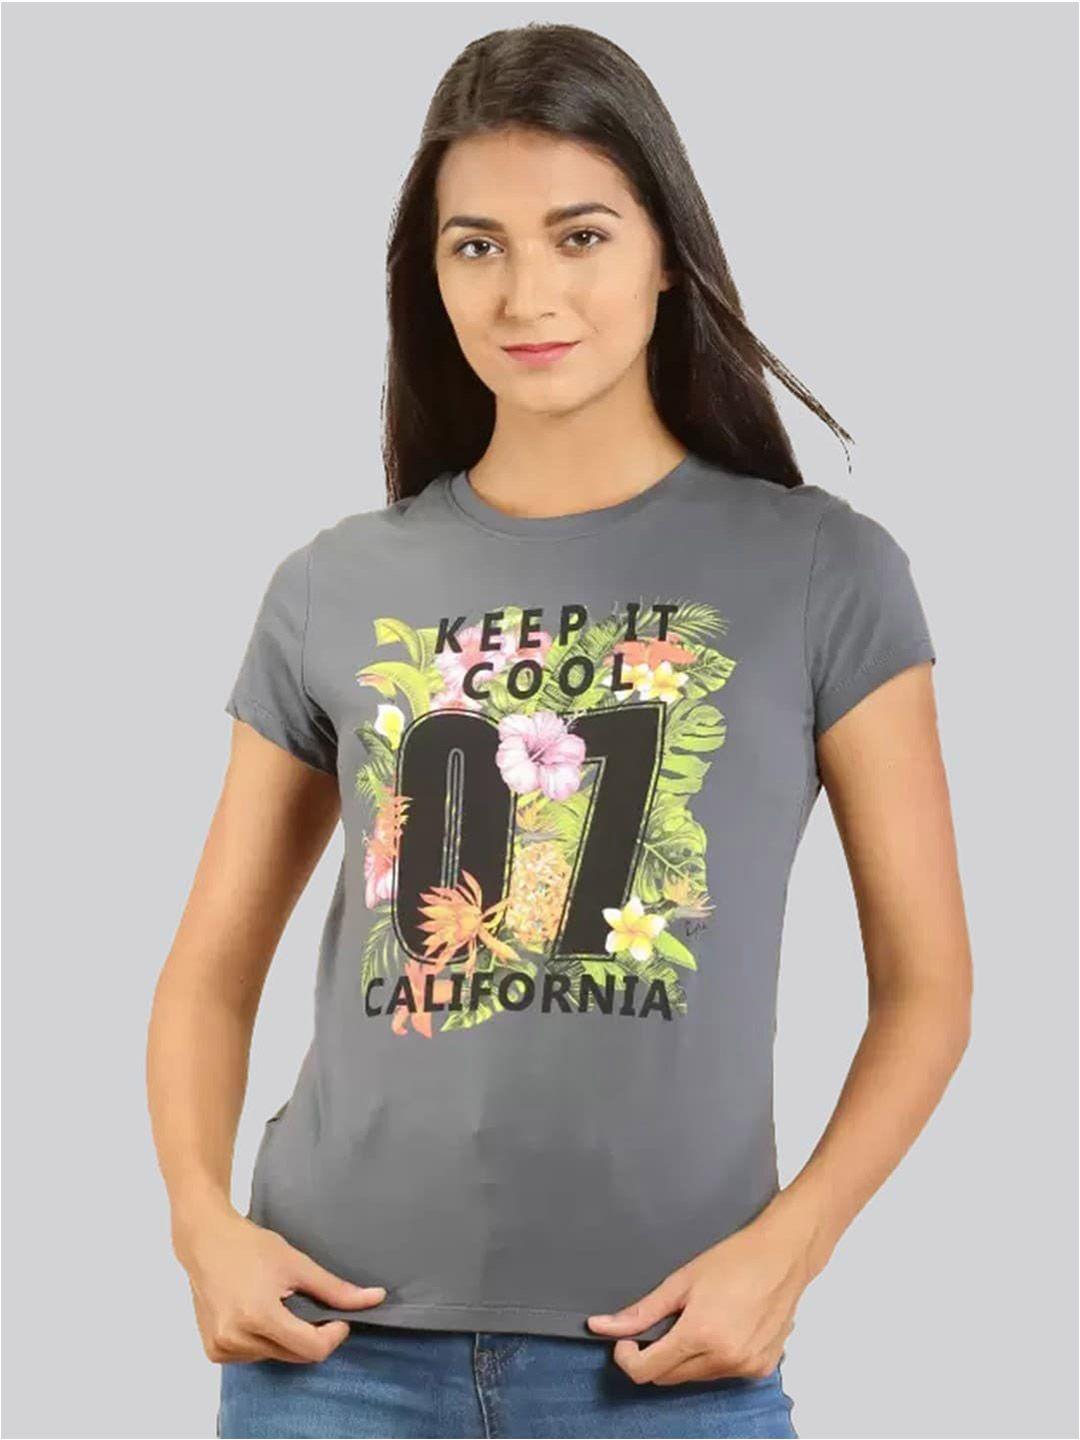 lyra-women-printed-round-neck-cotton-t-shirt